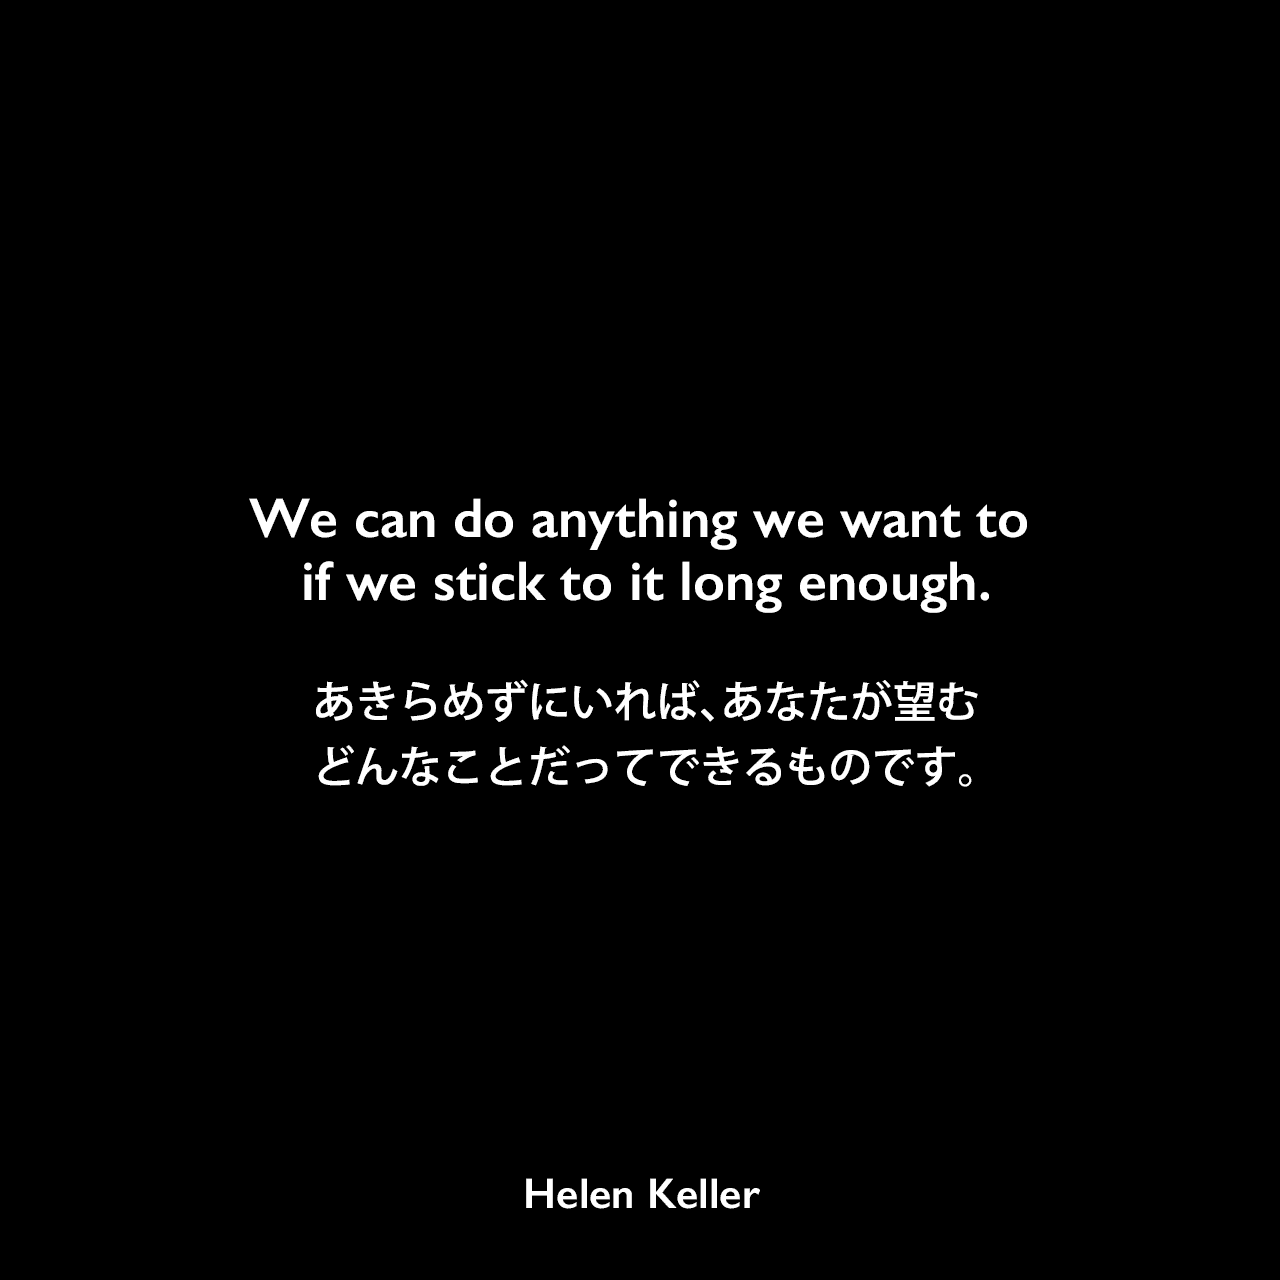 We can do anything we want to if we stick to it long enough.あきらめずにいれば、あなたが望む、どんなことだってできるものです。Helen Keller